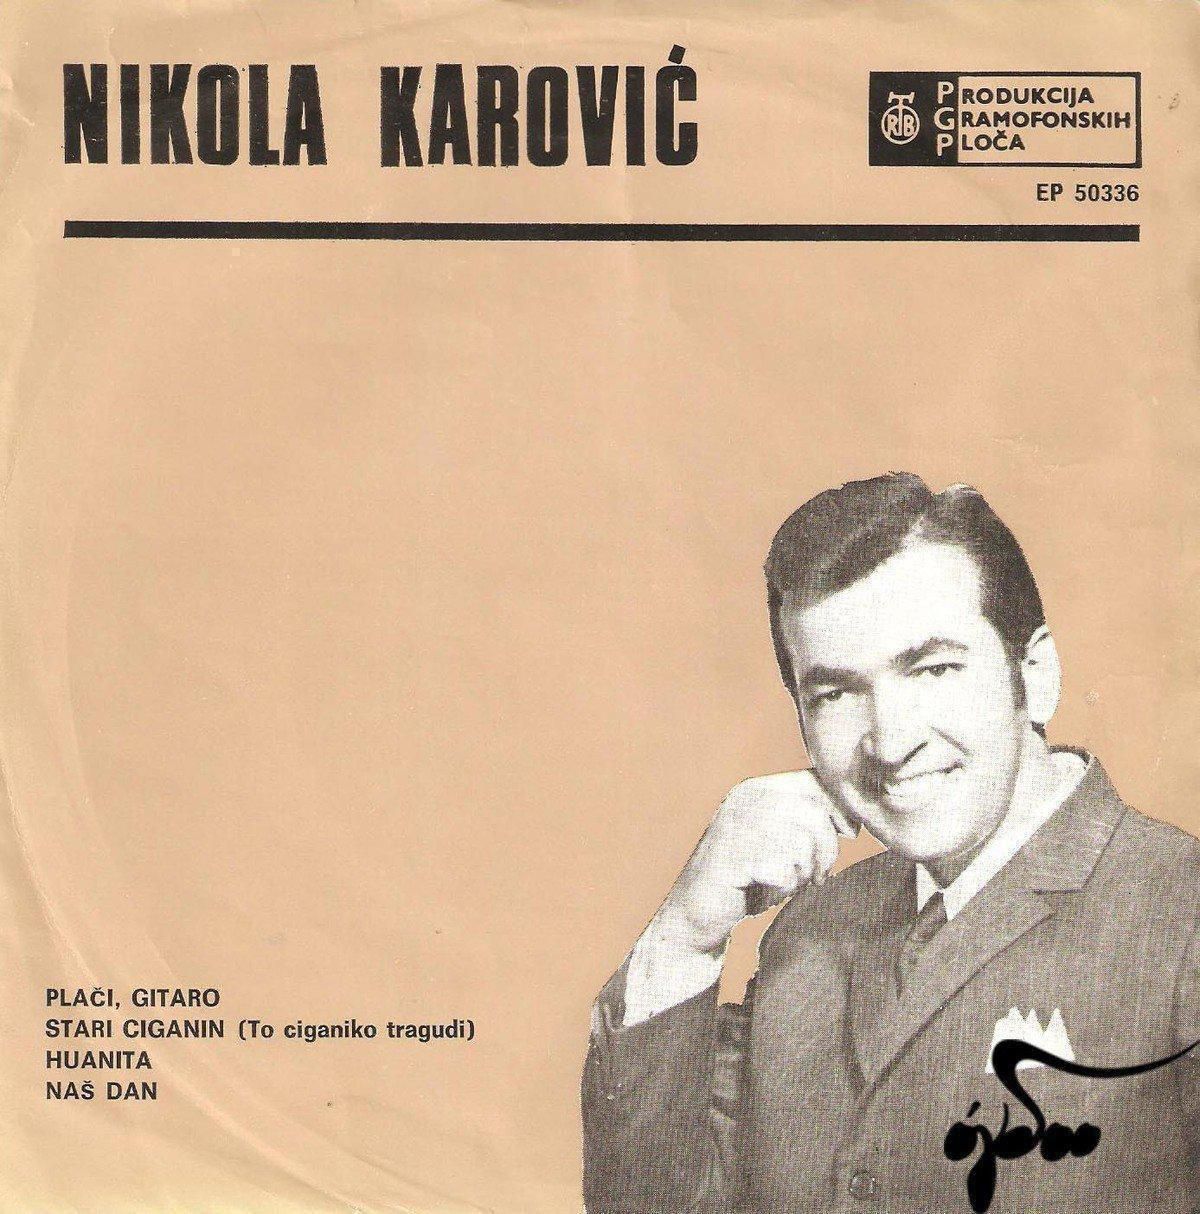 02.Nikola Karovic Tsigganiko 1 LOGO